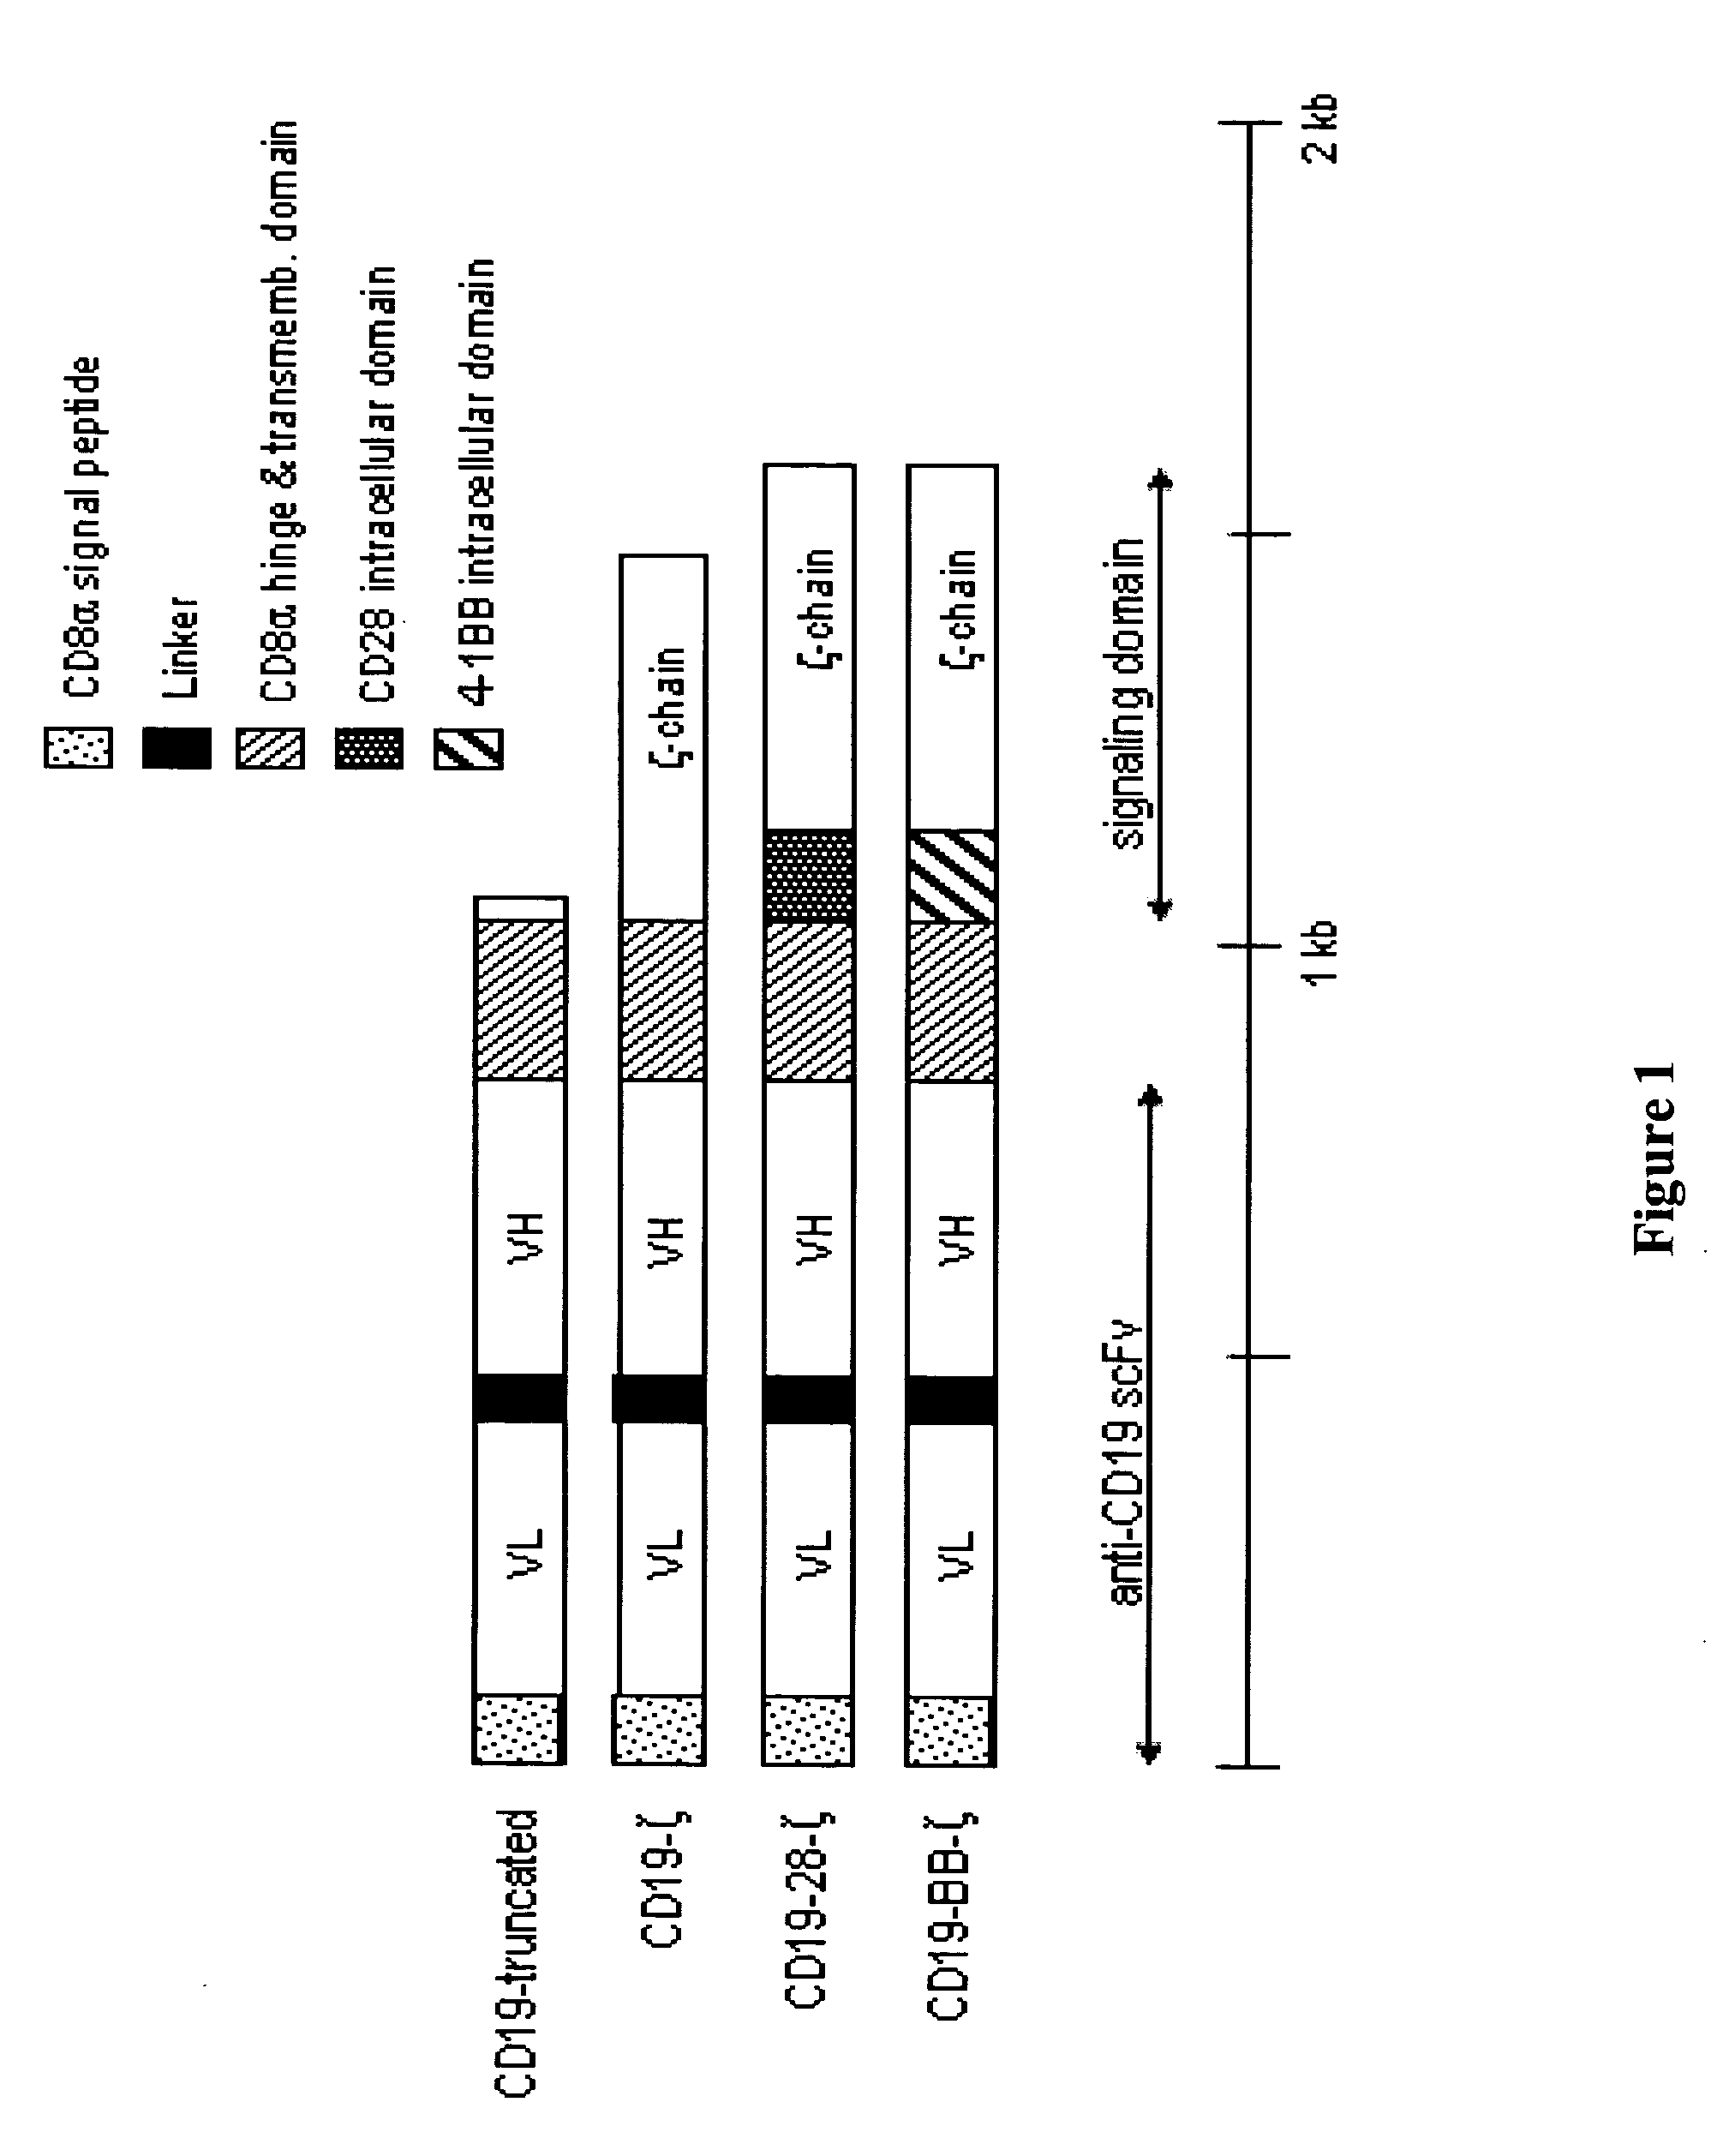 Chimeric receptors with 4-1BB stimulatory signaling domain